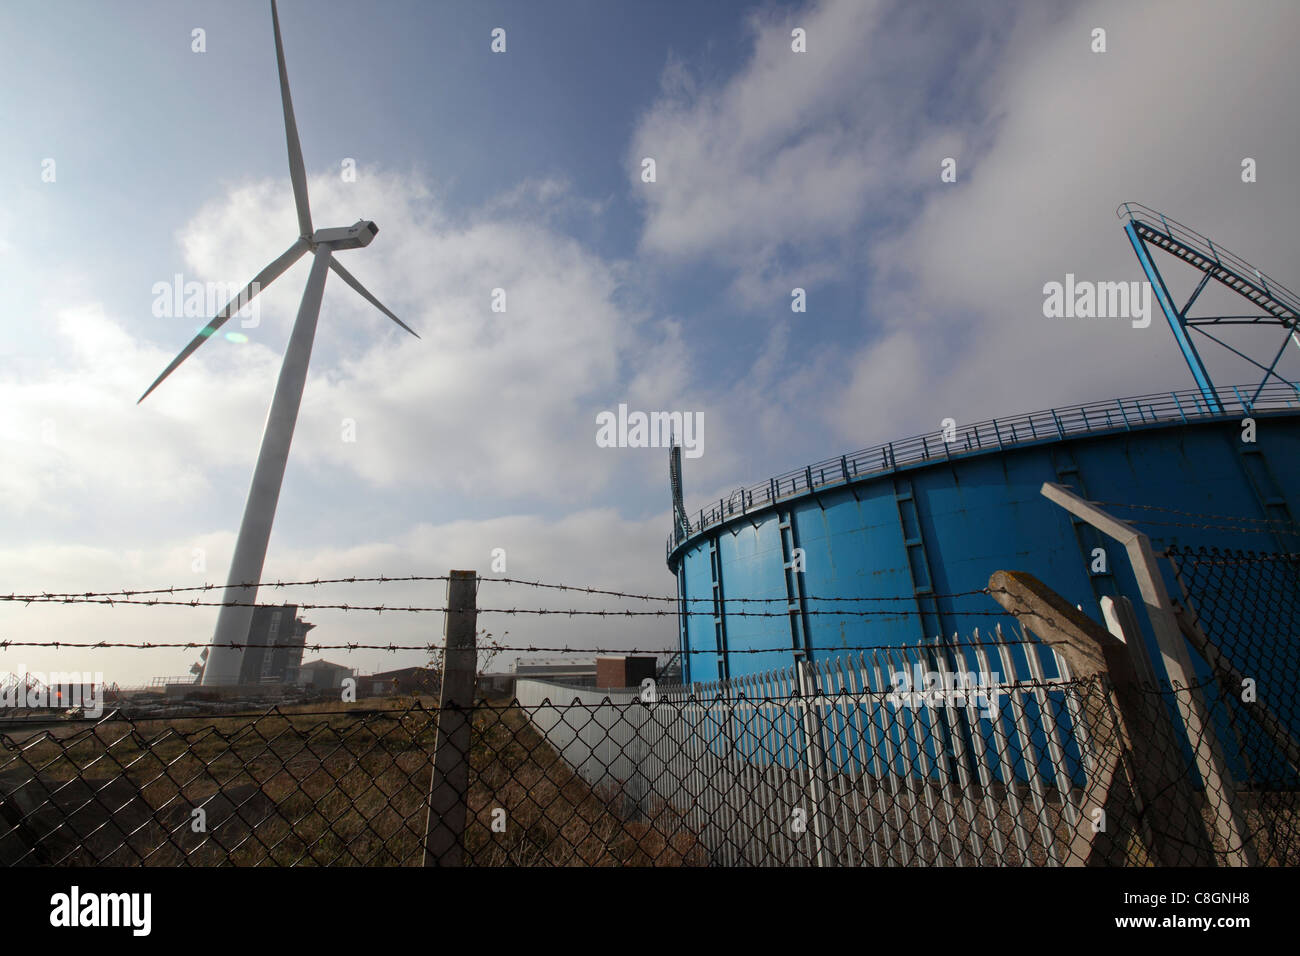 Large onshore wind turbine & gasometer / gas works, illustrating carbon based & sustainable energy side by side, Lowestoft Stock Photo